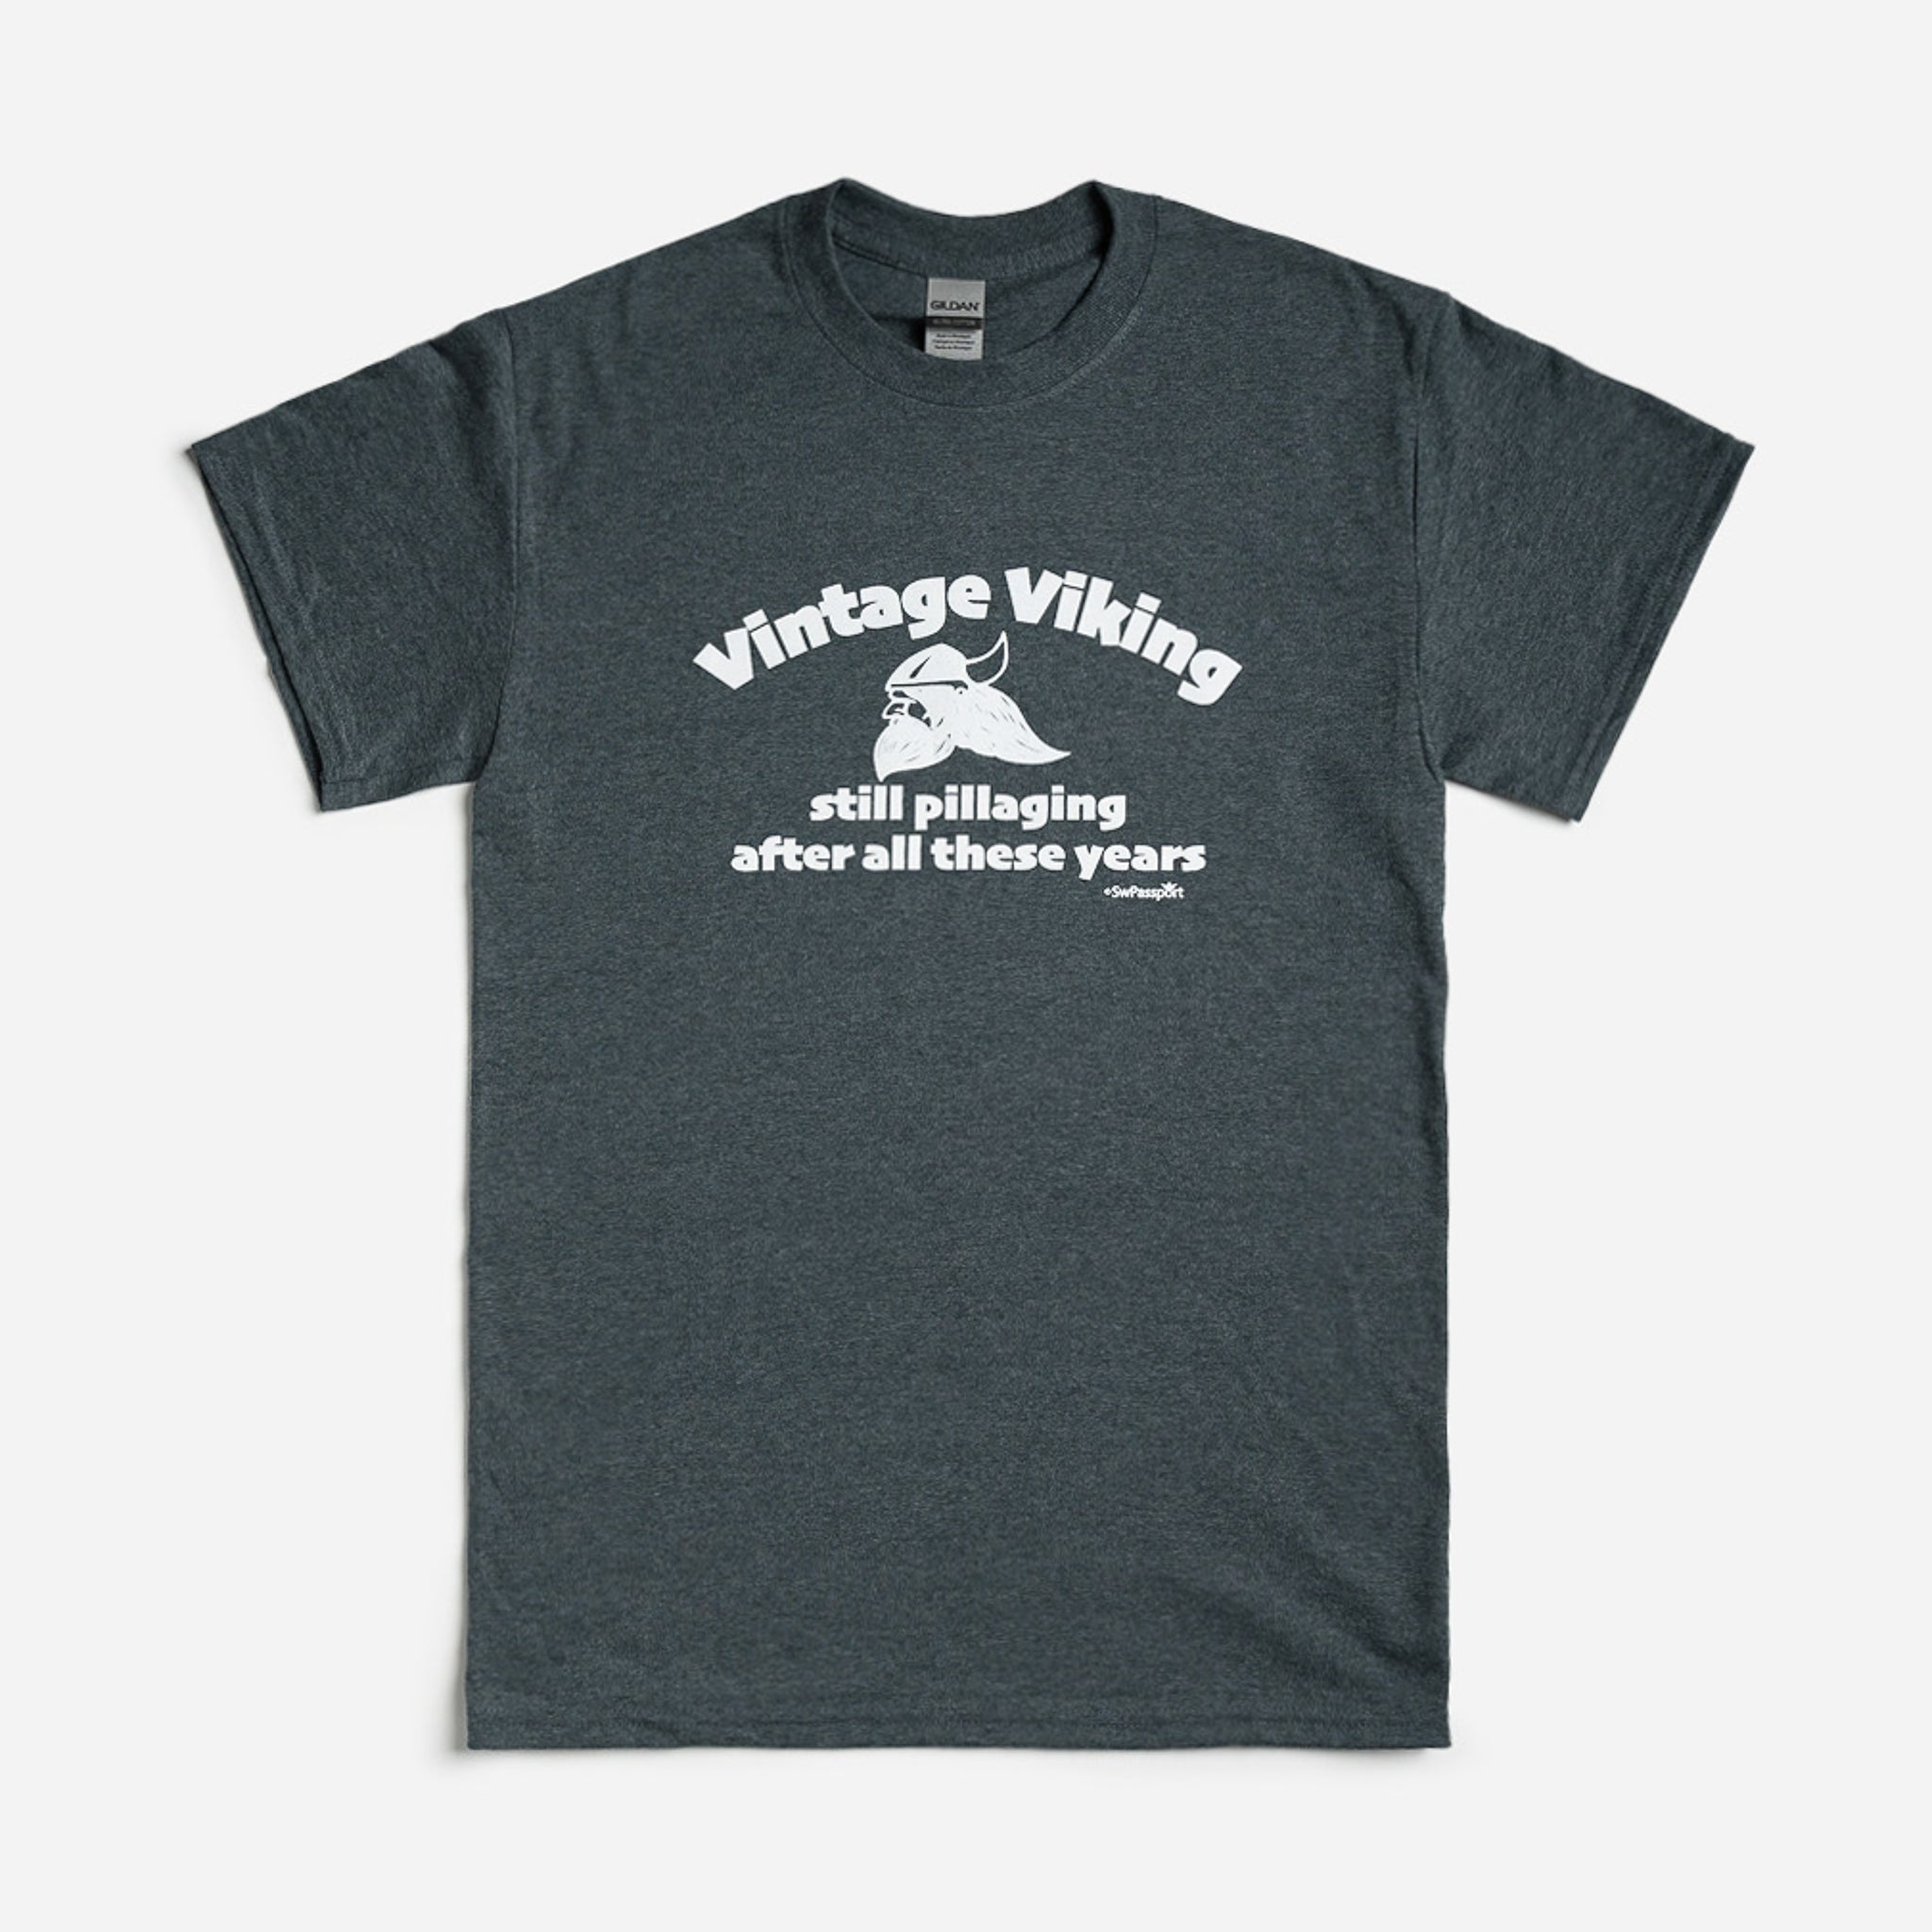 Vintage Viking T-Shirt